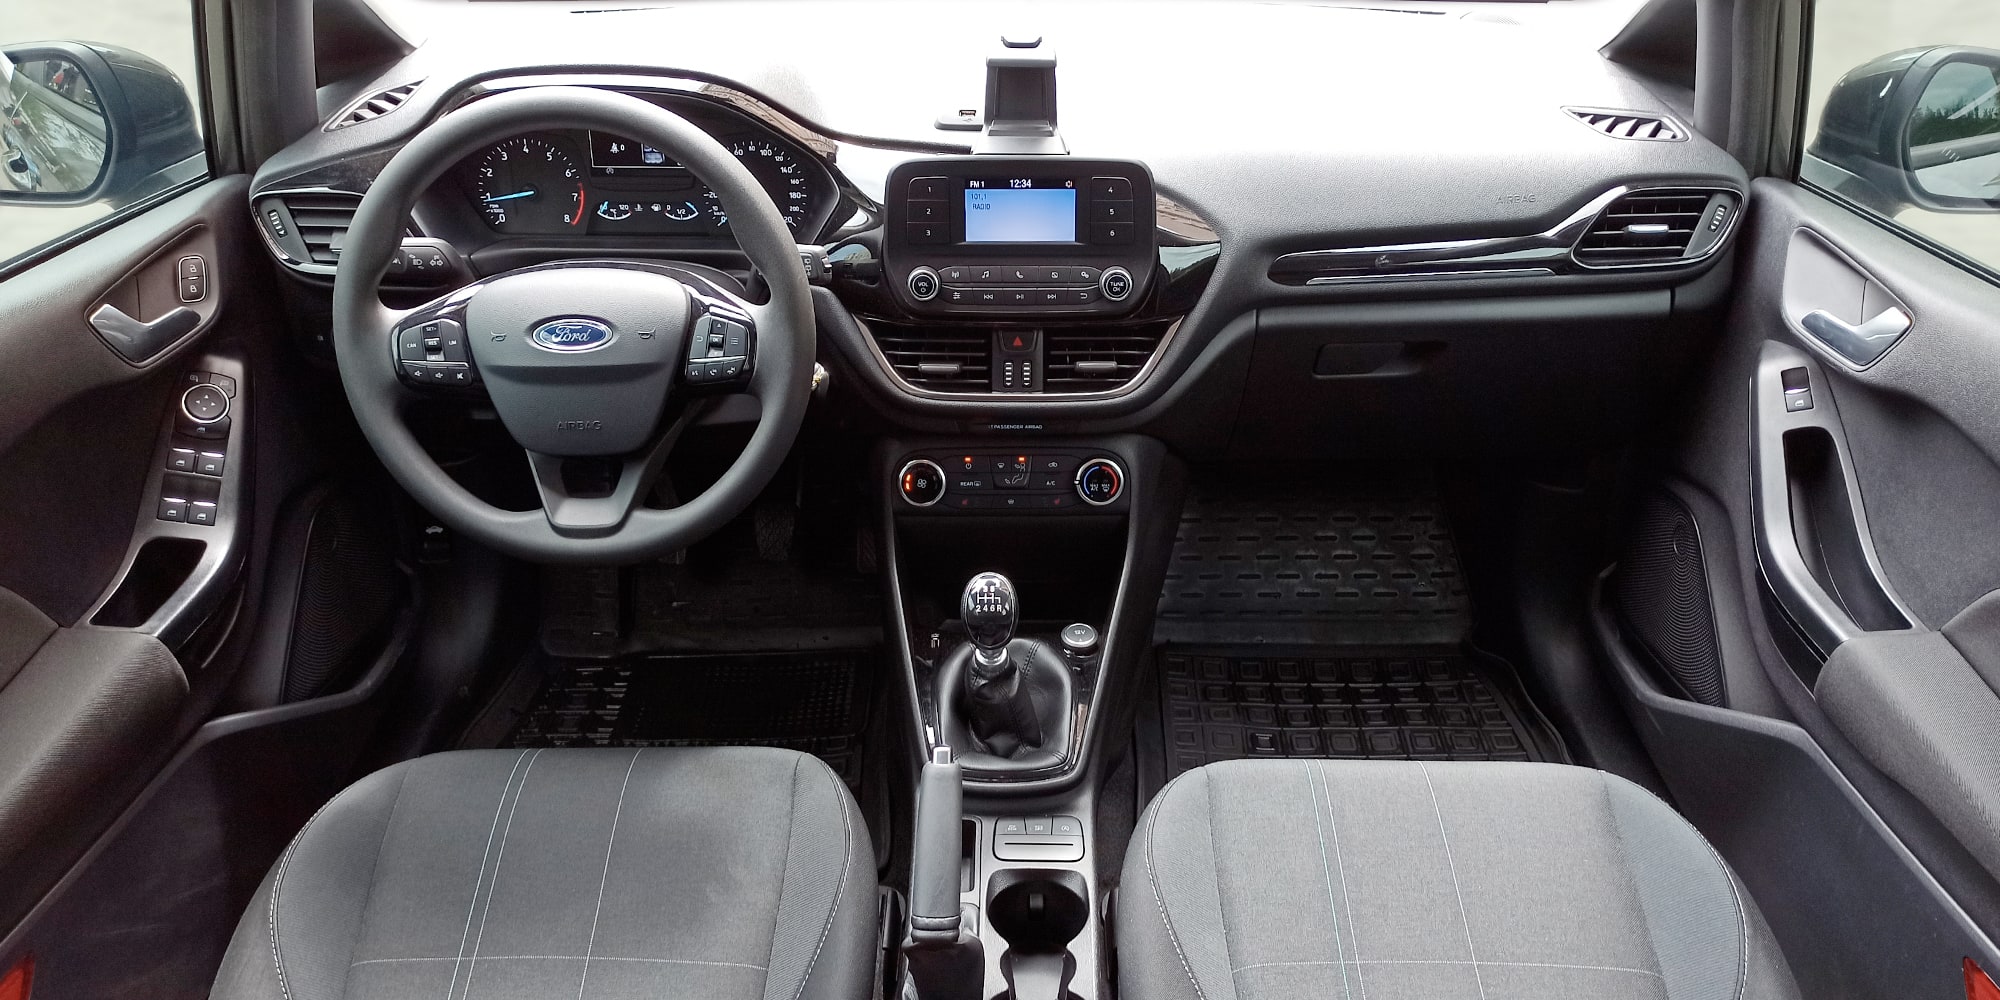 Ford Fiesta new - TopRent: Служба аренды авто в Киеве